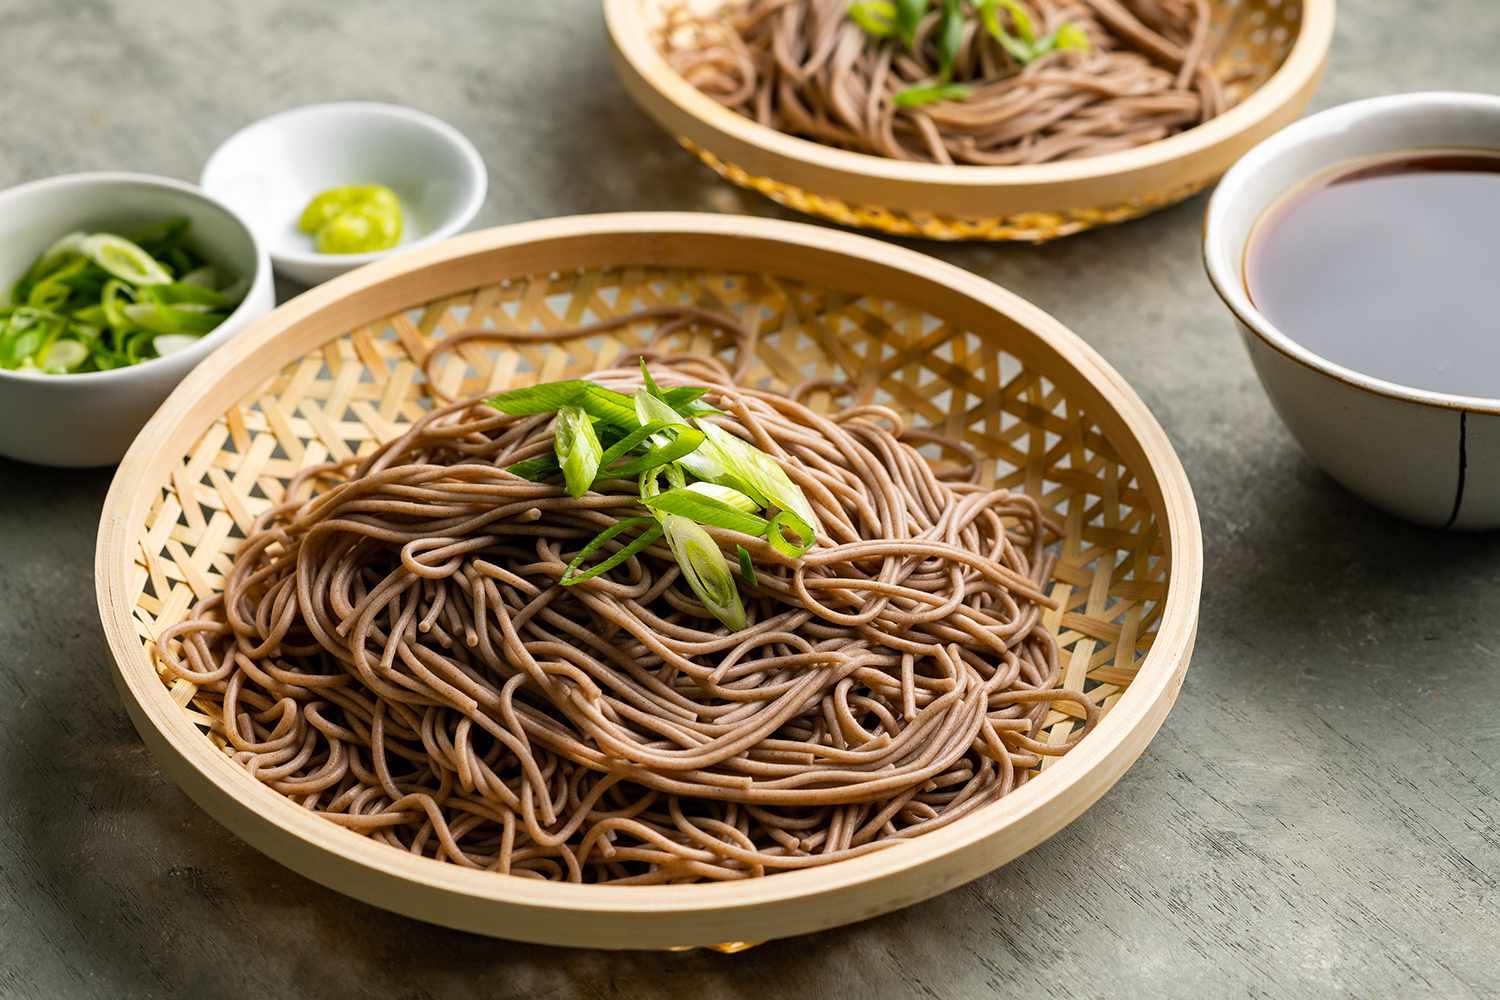 Soba Noodles - Japanese buckwheat noodles